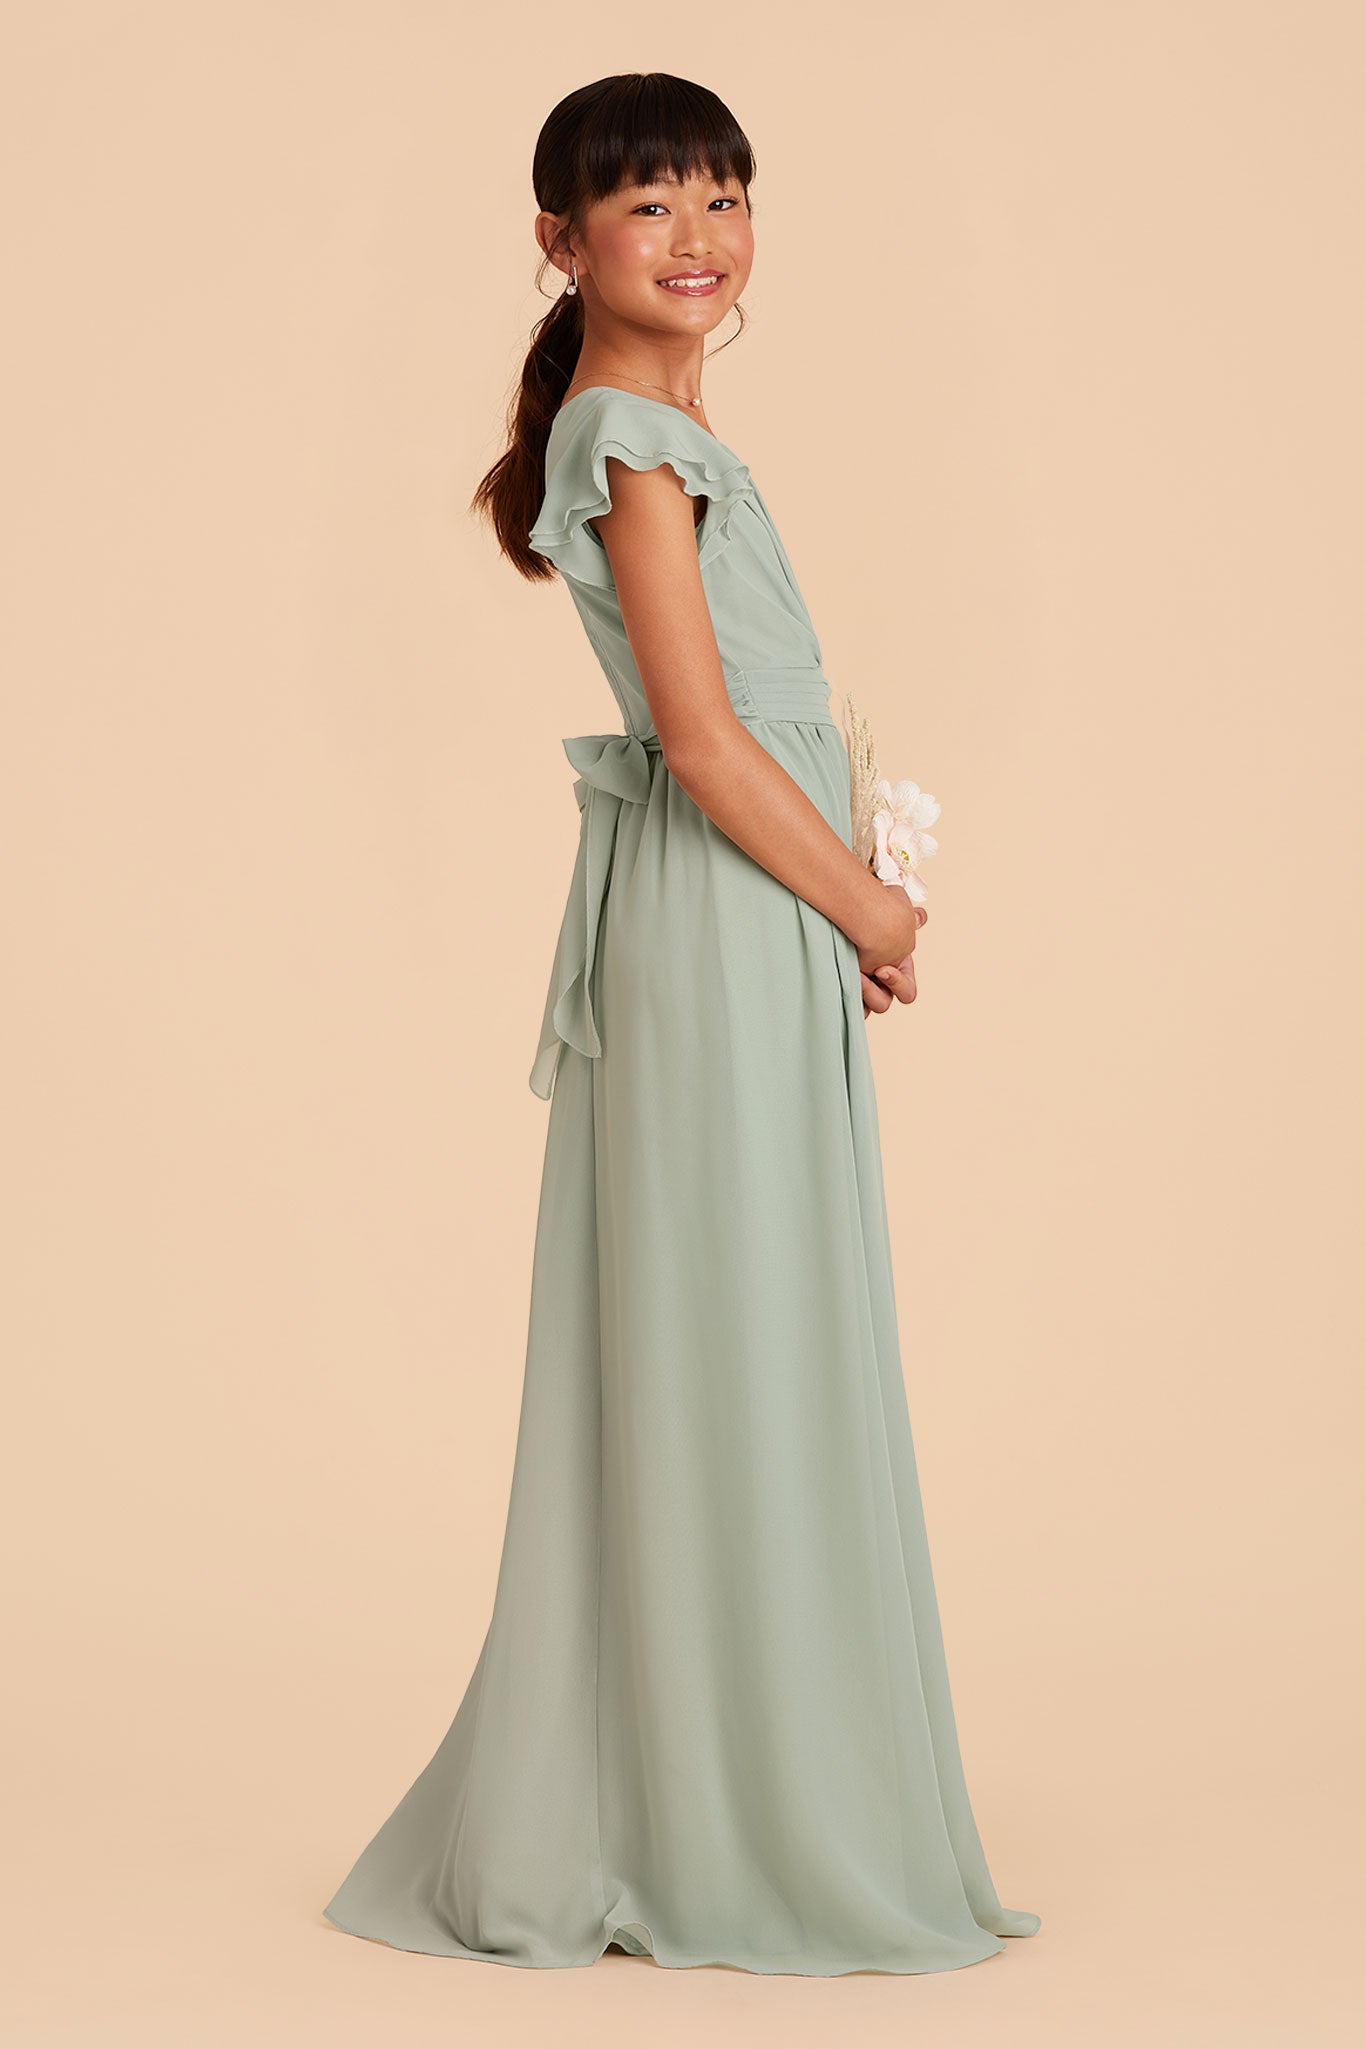 sage light green frilly-sleeved floor length junior bridesmaid dress 